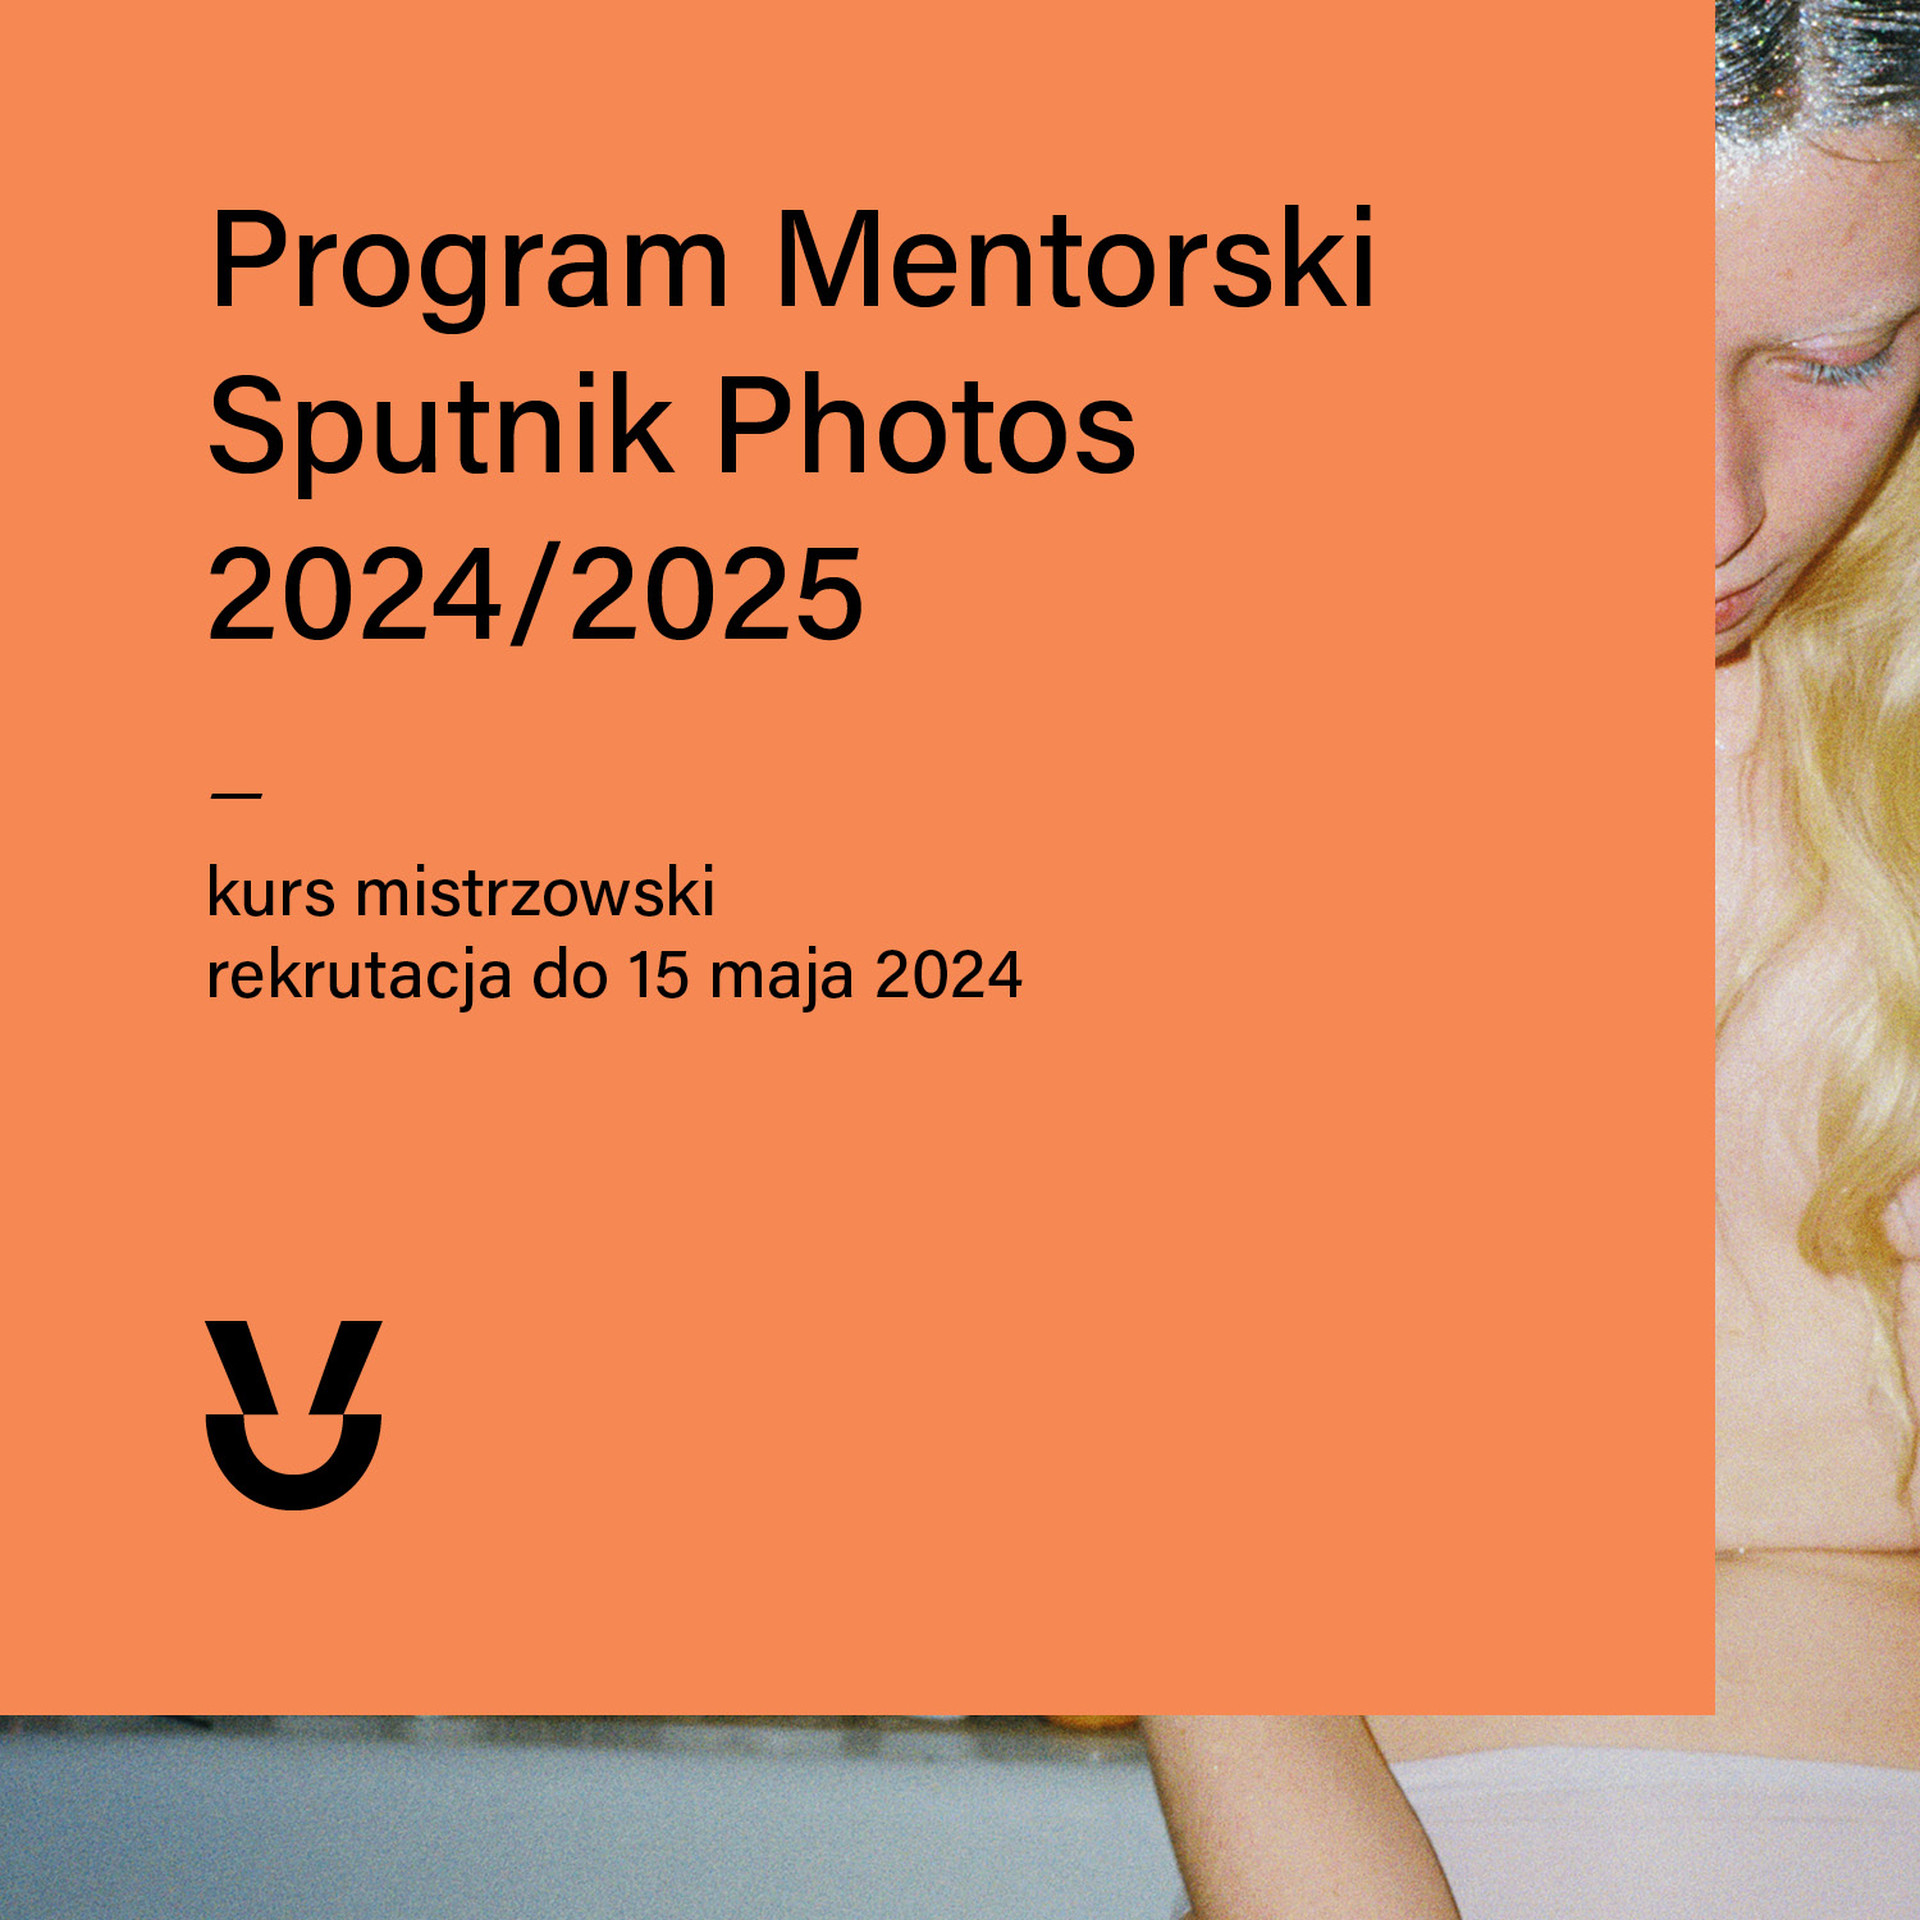  Program Mentorski Sputnik Photos rekrutacja do 15 maja 2024 